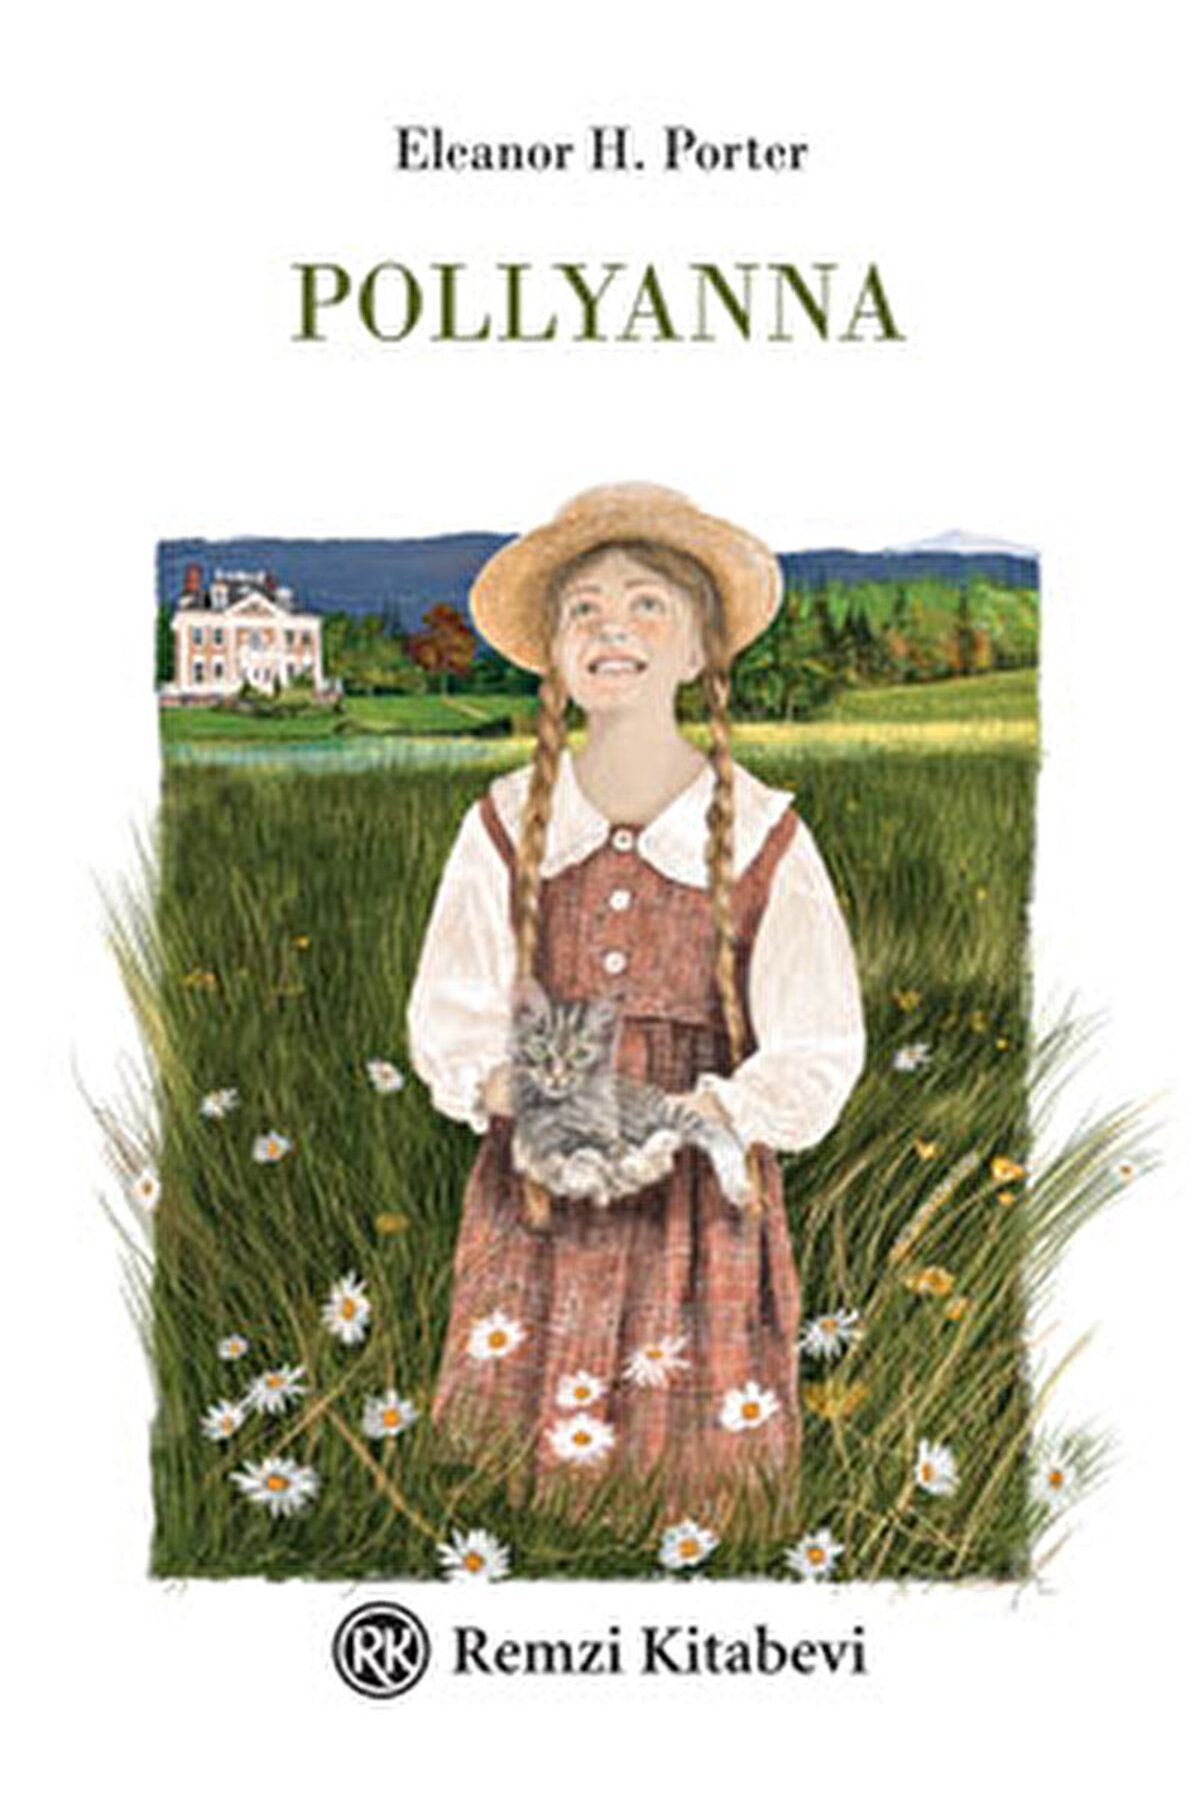 Remzi Kitabevi Pollyanna / Eleanor H. Porter / Remzi Kitabevi / 9789751421104